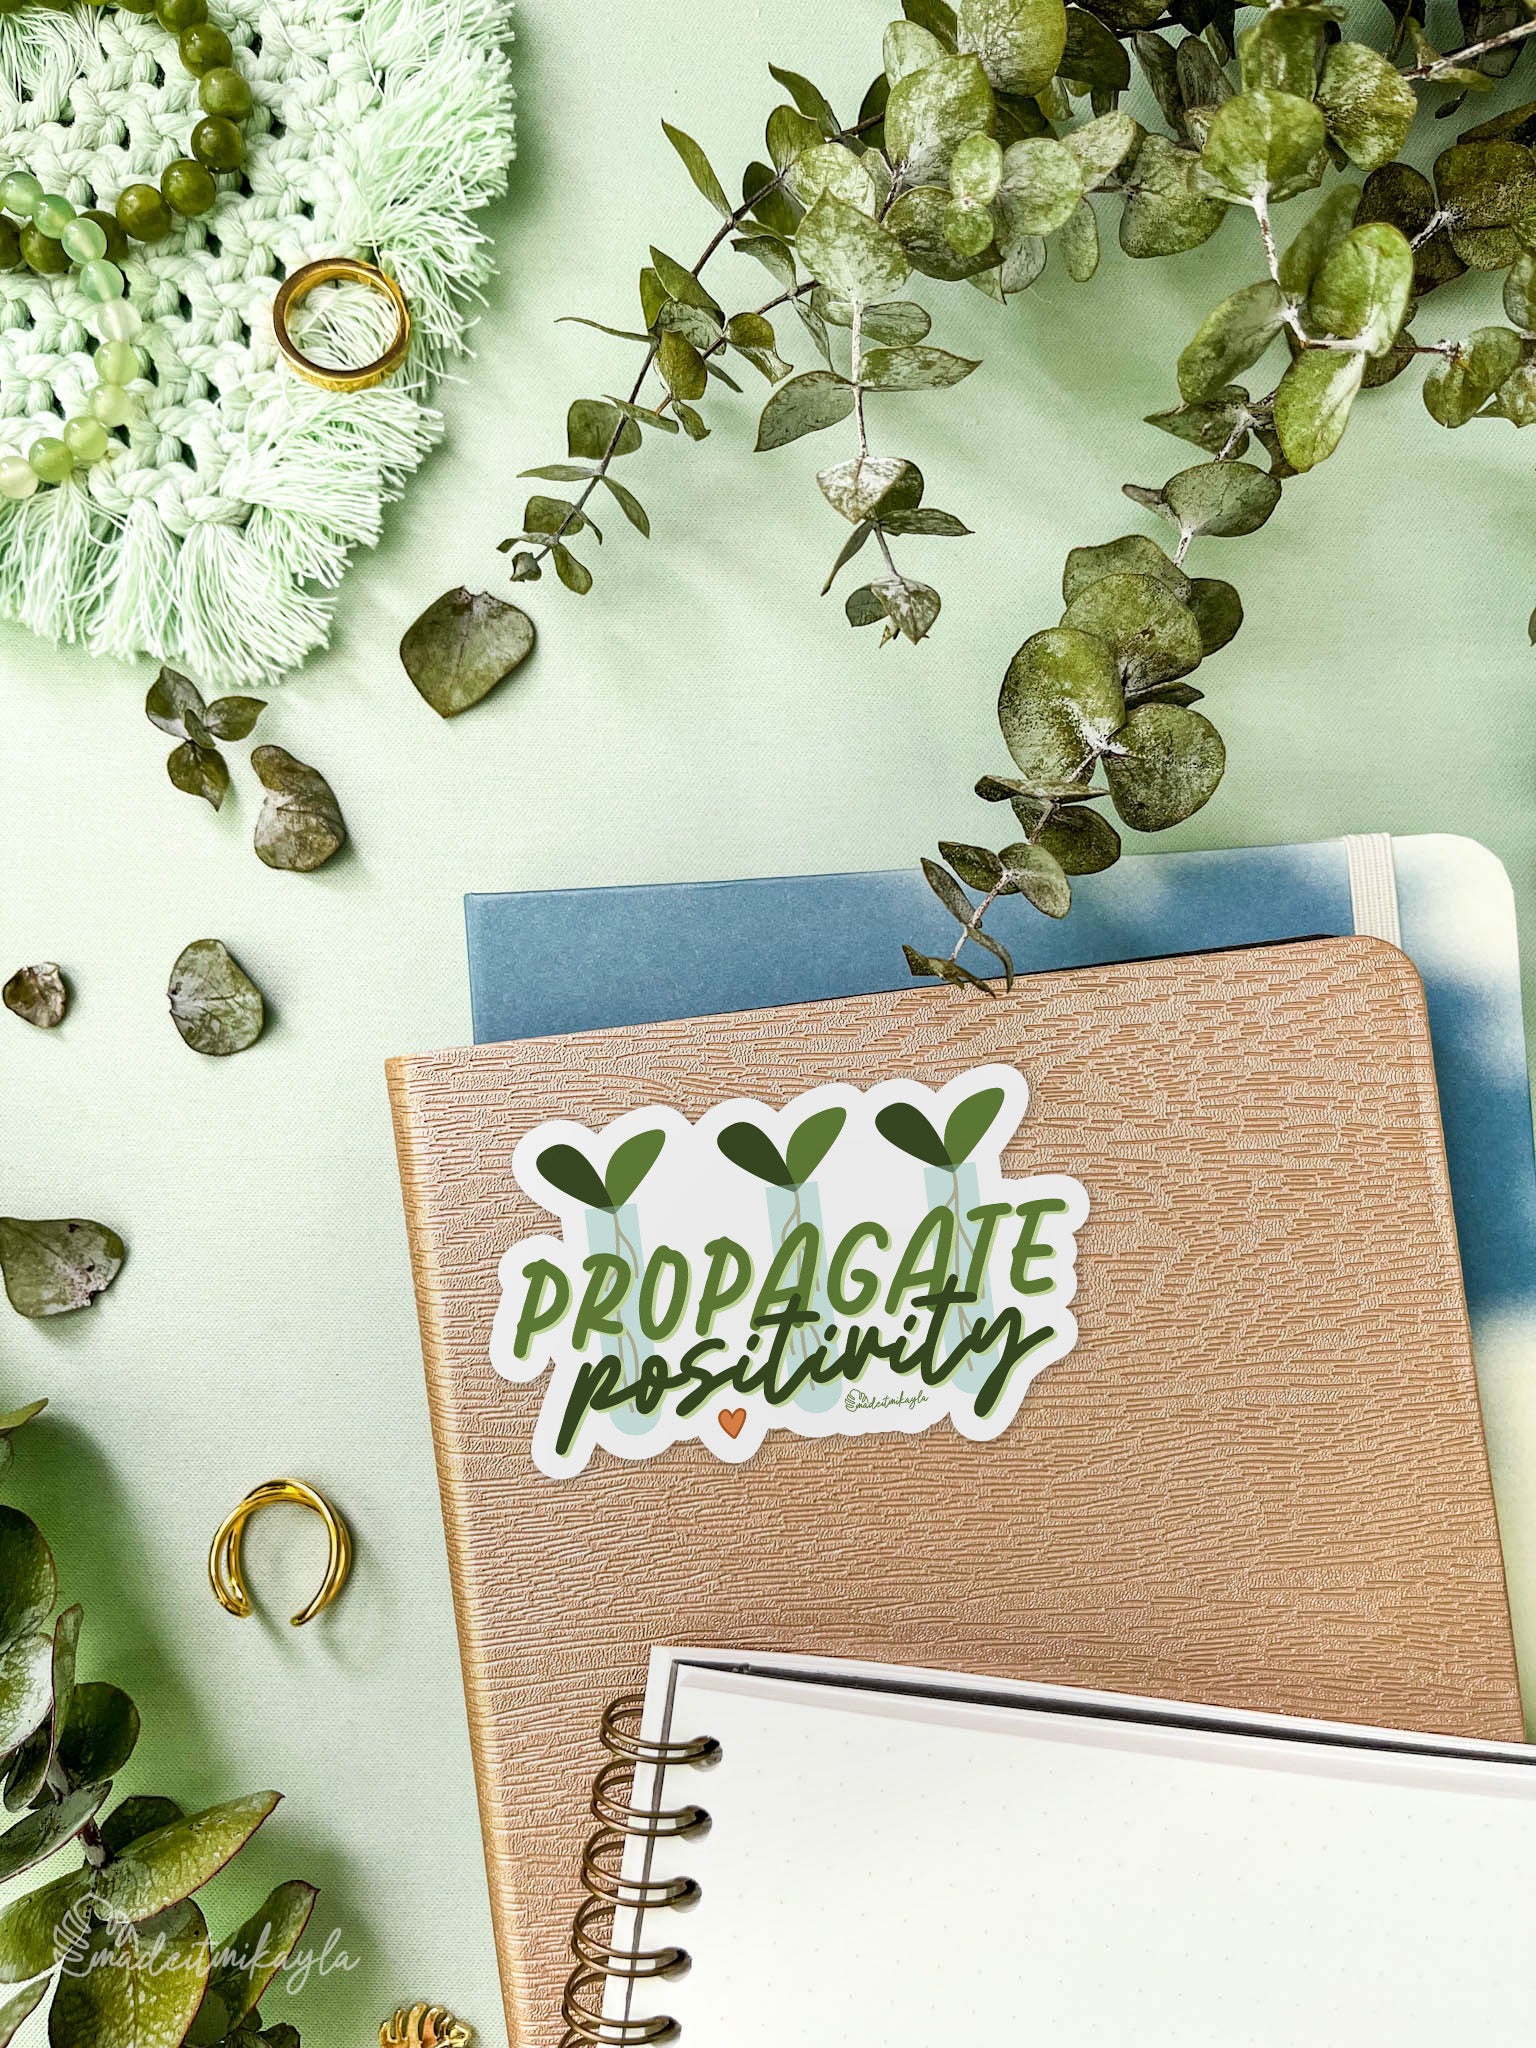 Propagate Positivity Sticker | MadeItMikayla